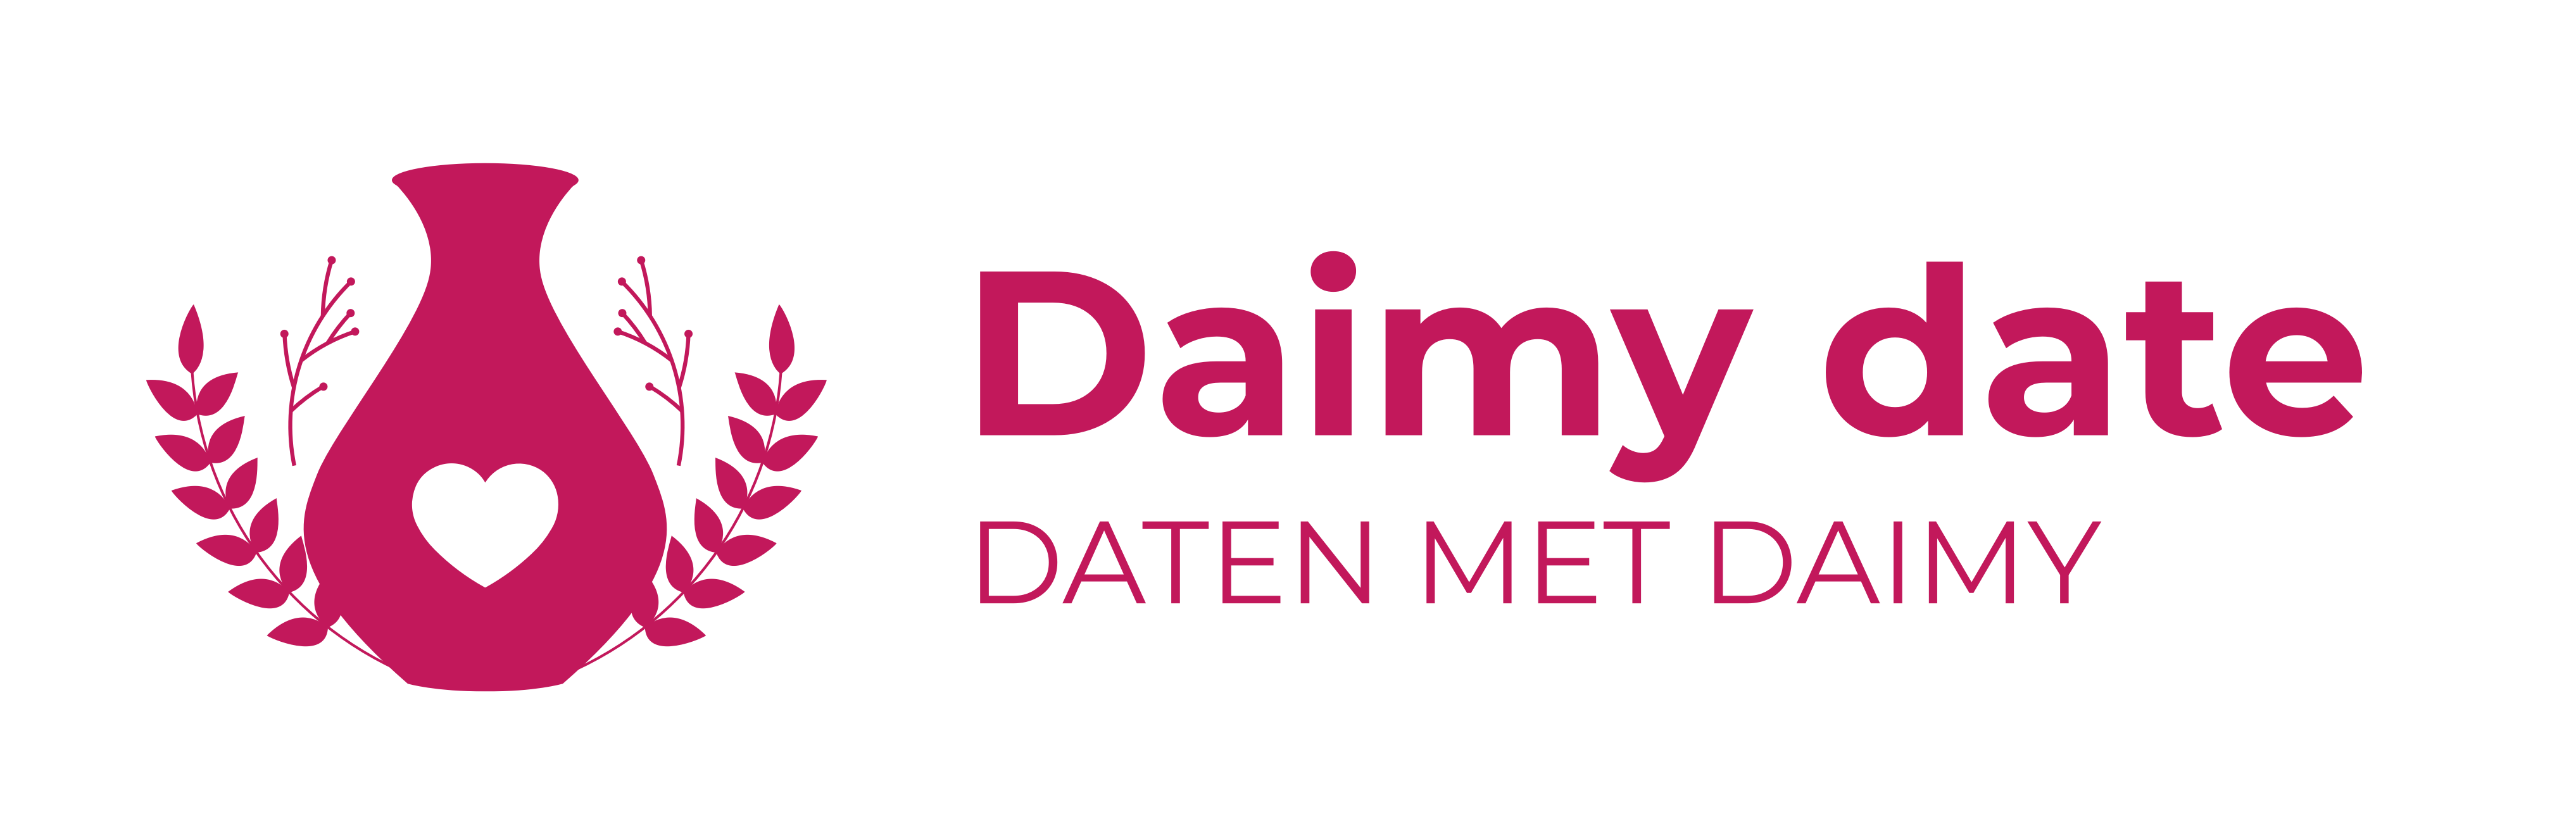 Daimy date